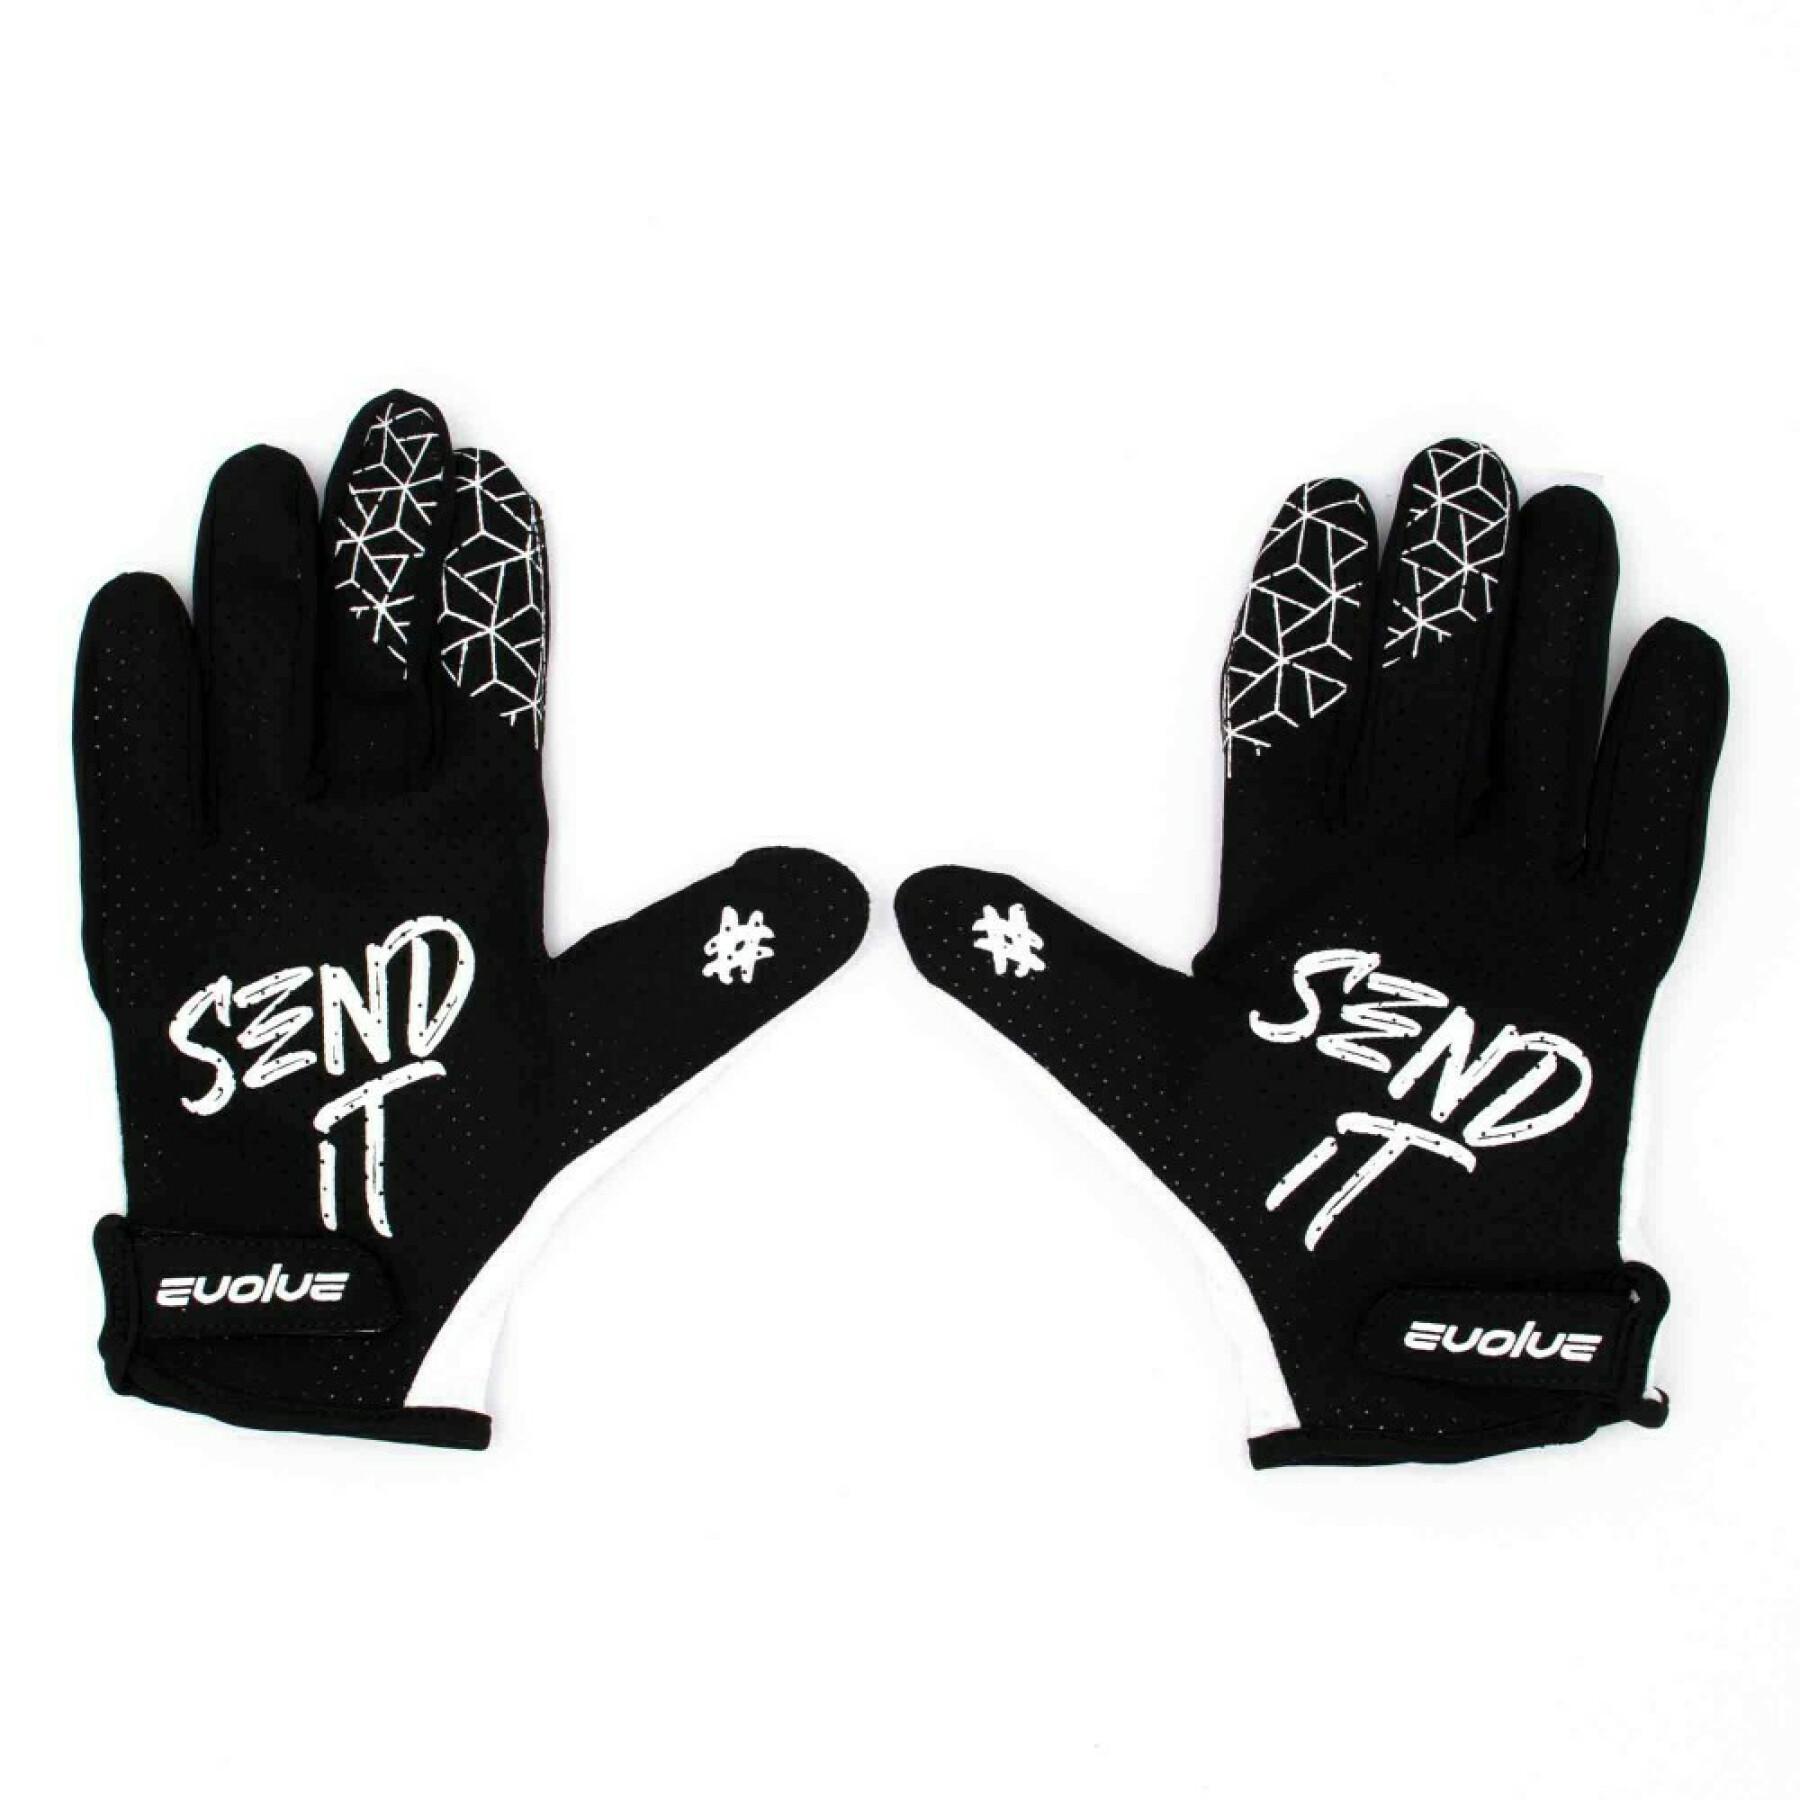 Gloves Evolve send it